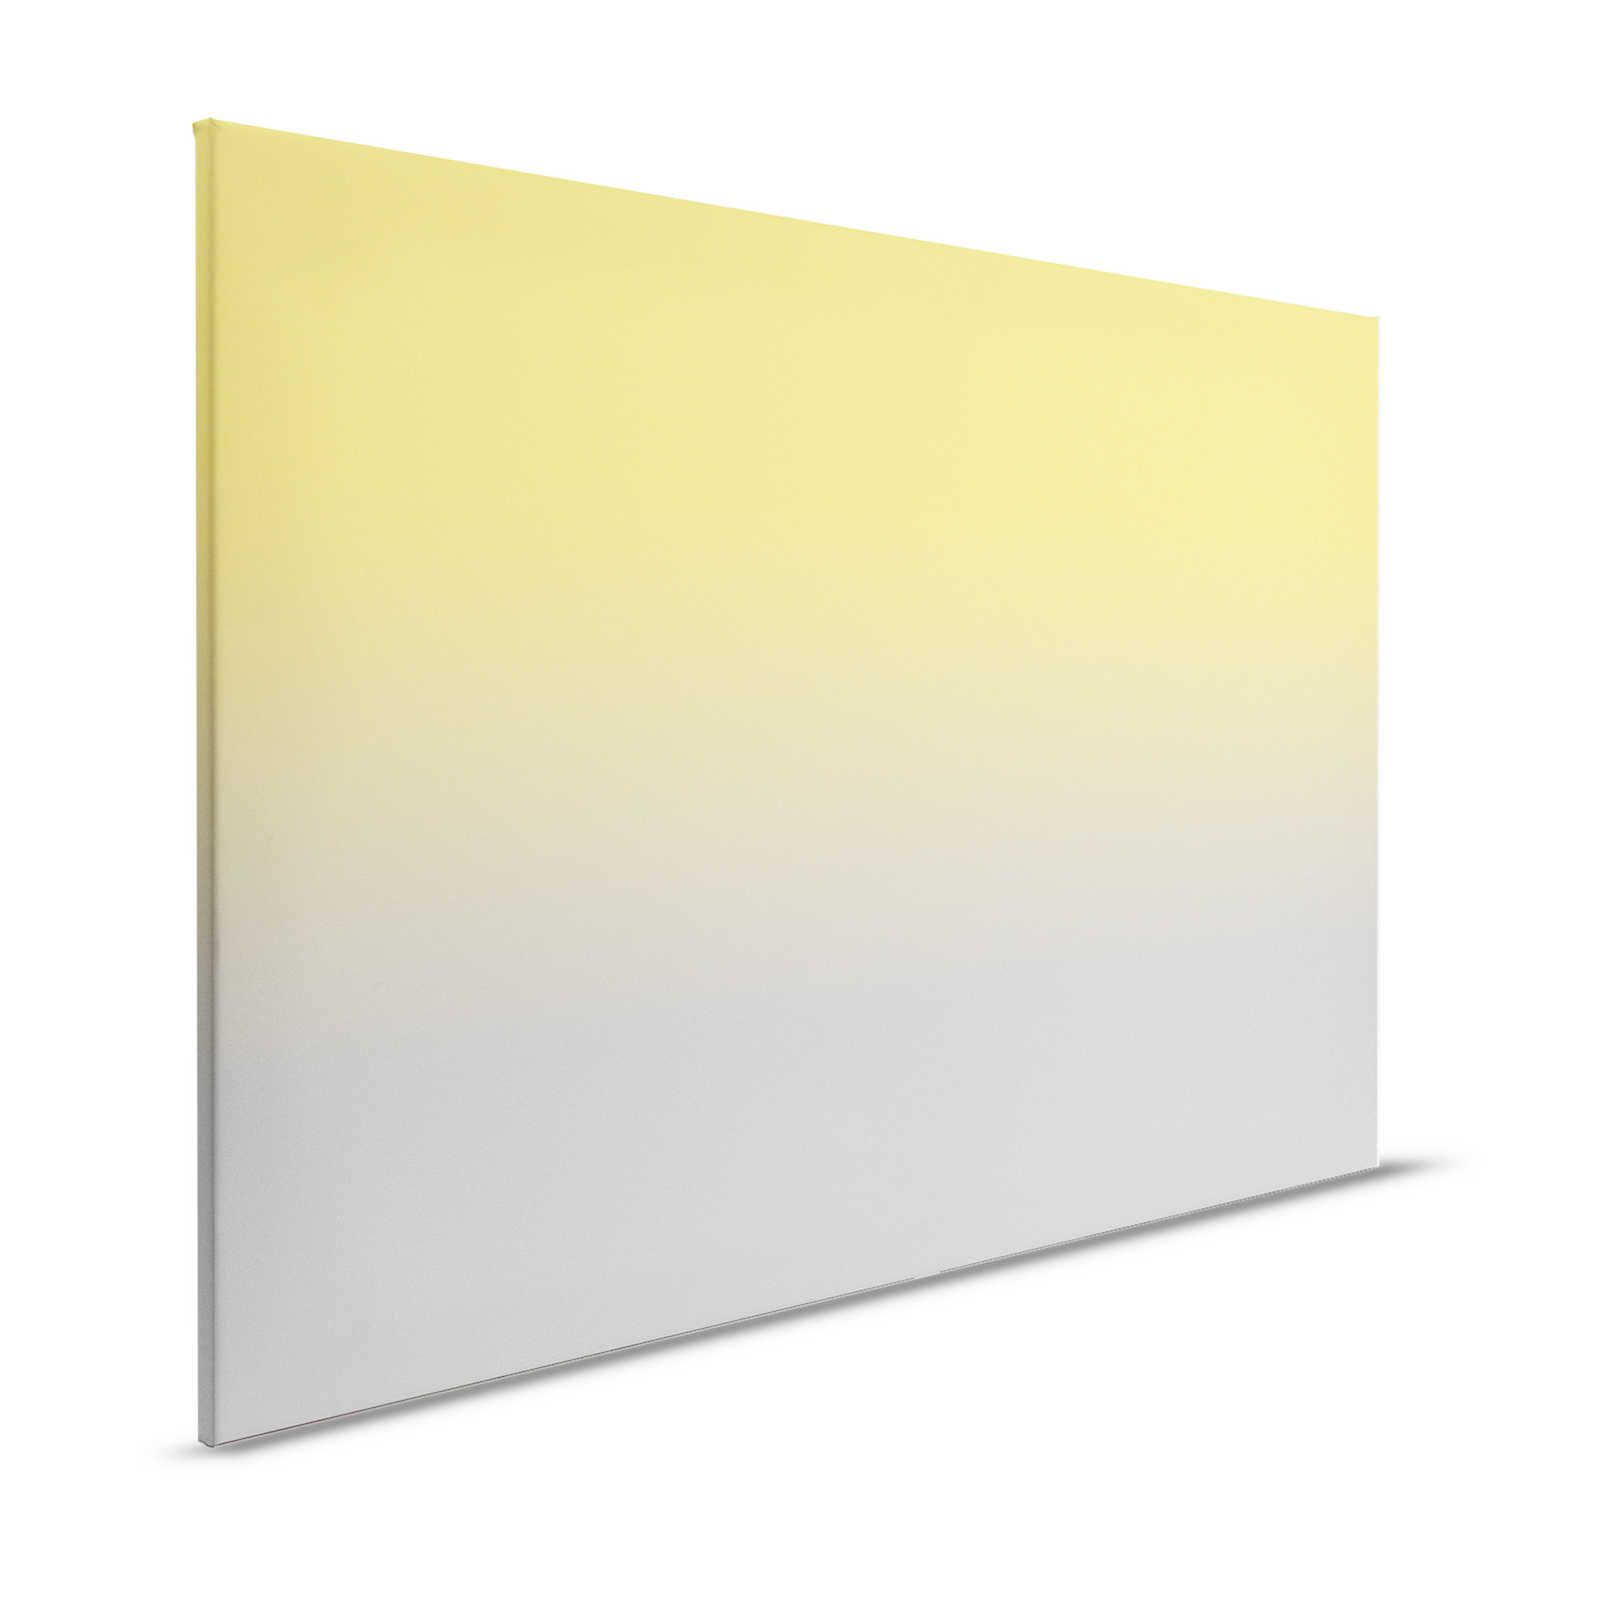 Colour Studio 1 - Canvas painting Yellow & Grey Trendy Colours Ombre Effect - 1.20 m x 0.80 m
